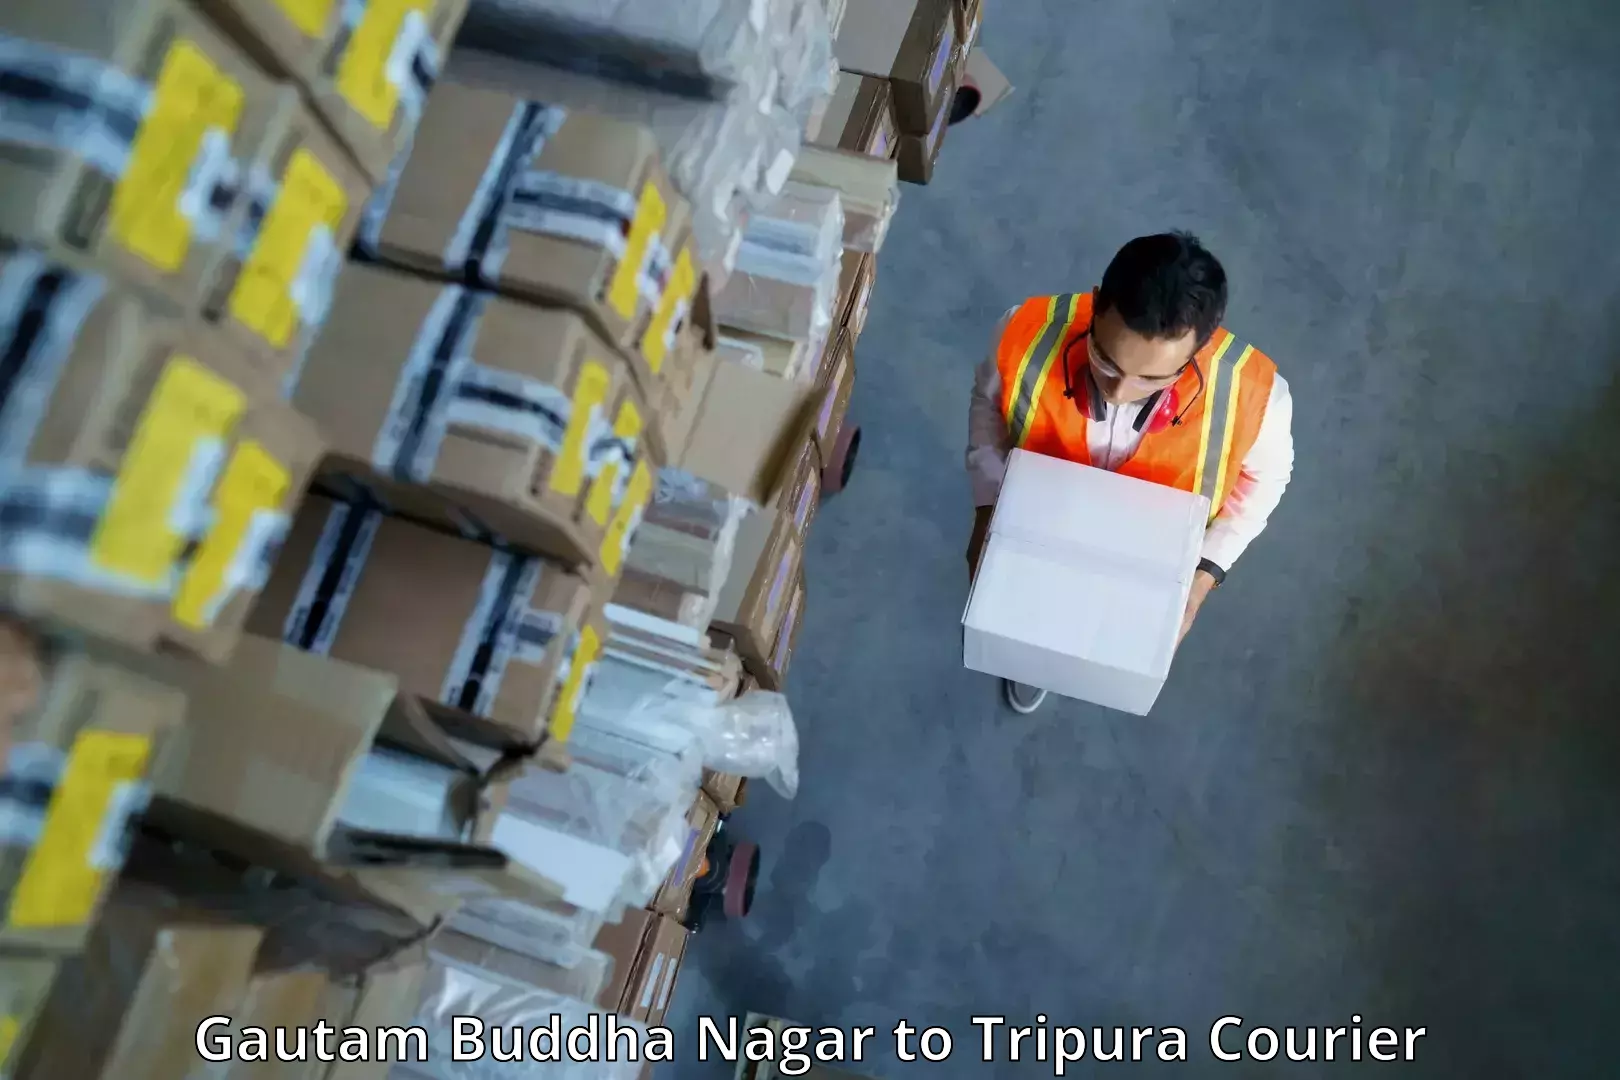 Flexible delivery schedules in Gautam Buddha Nagar to Udaipur Tripura